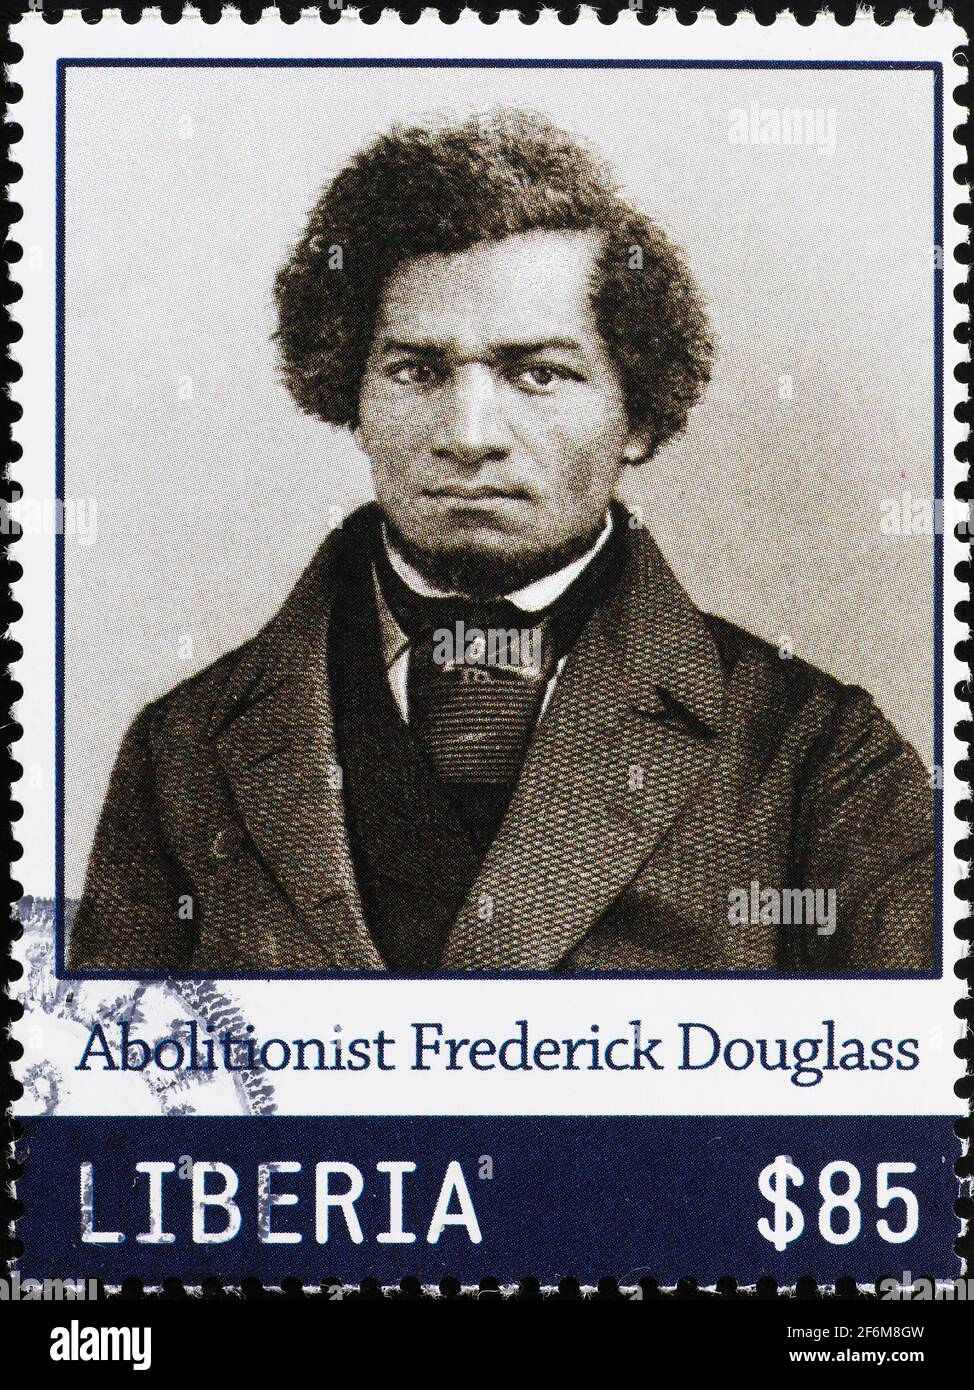 Abolitionist Frederick Douglass on postage stamp Stock Photo